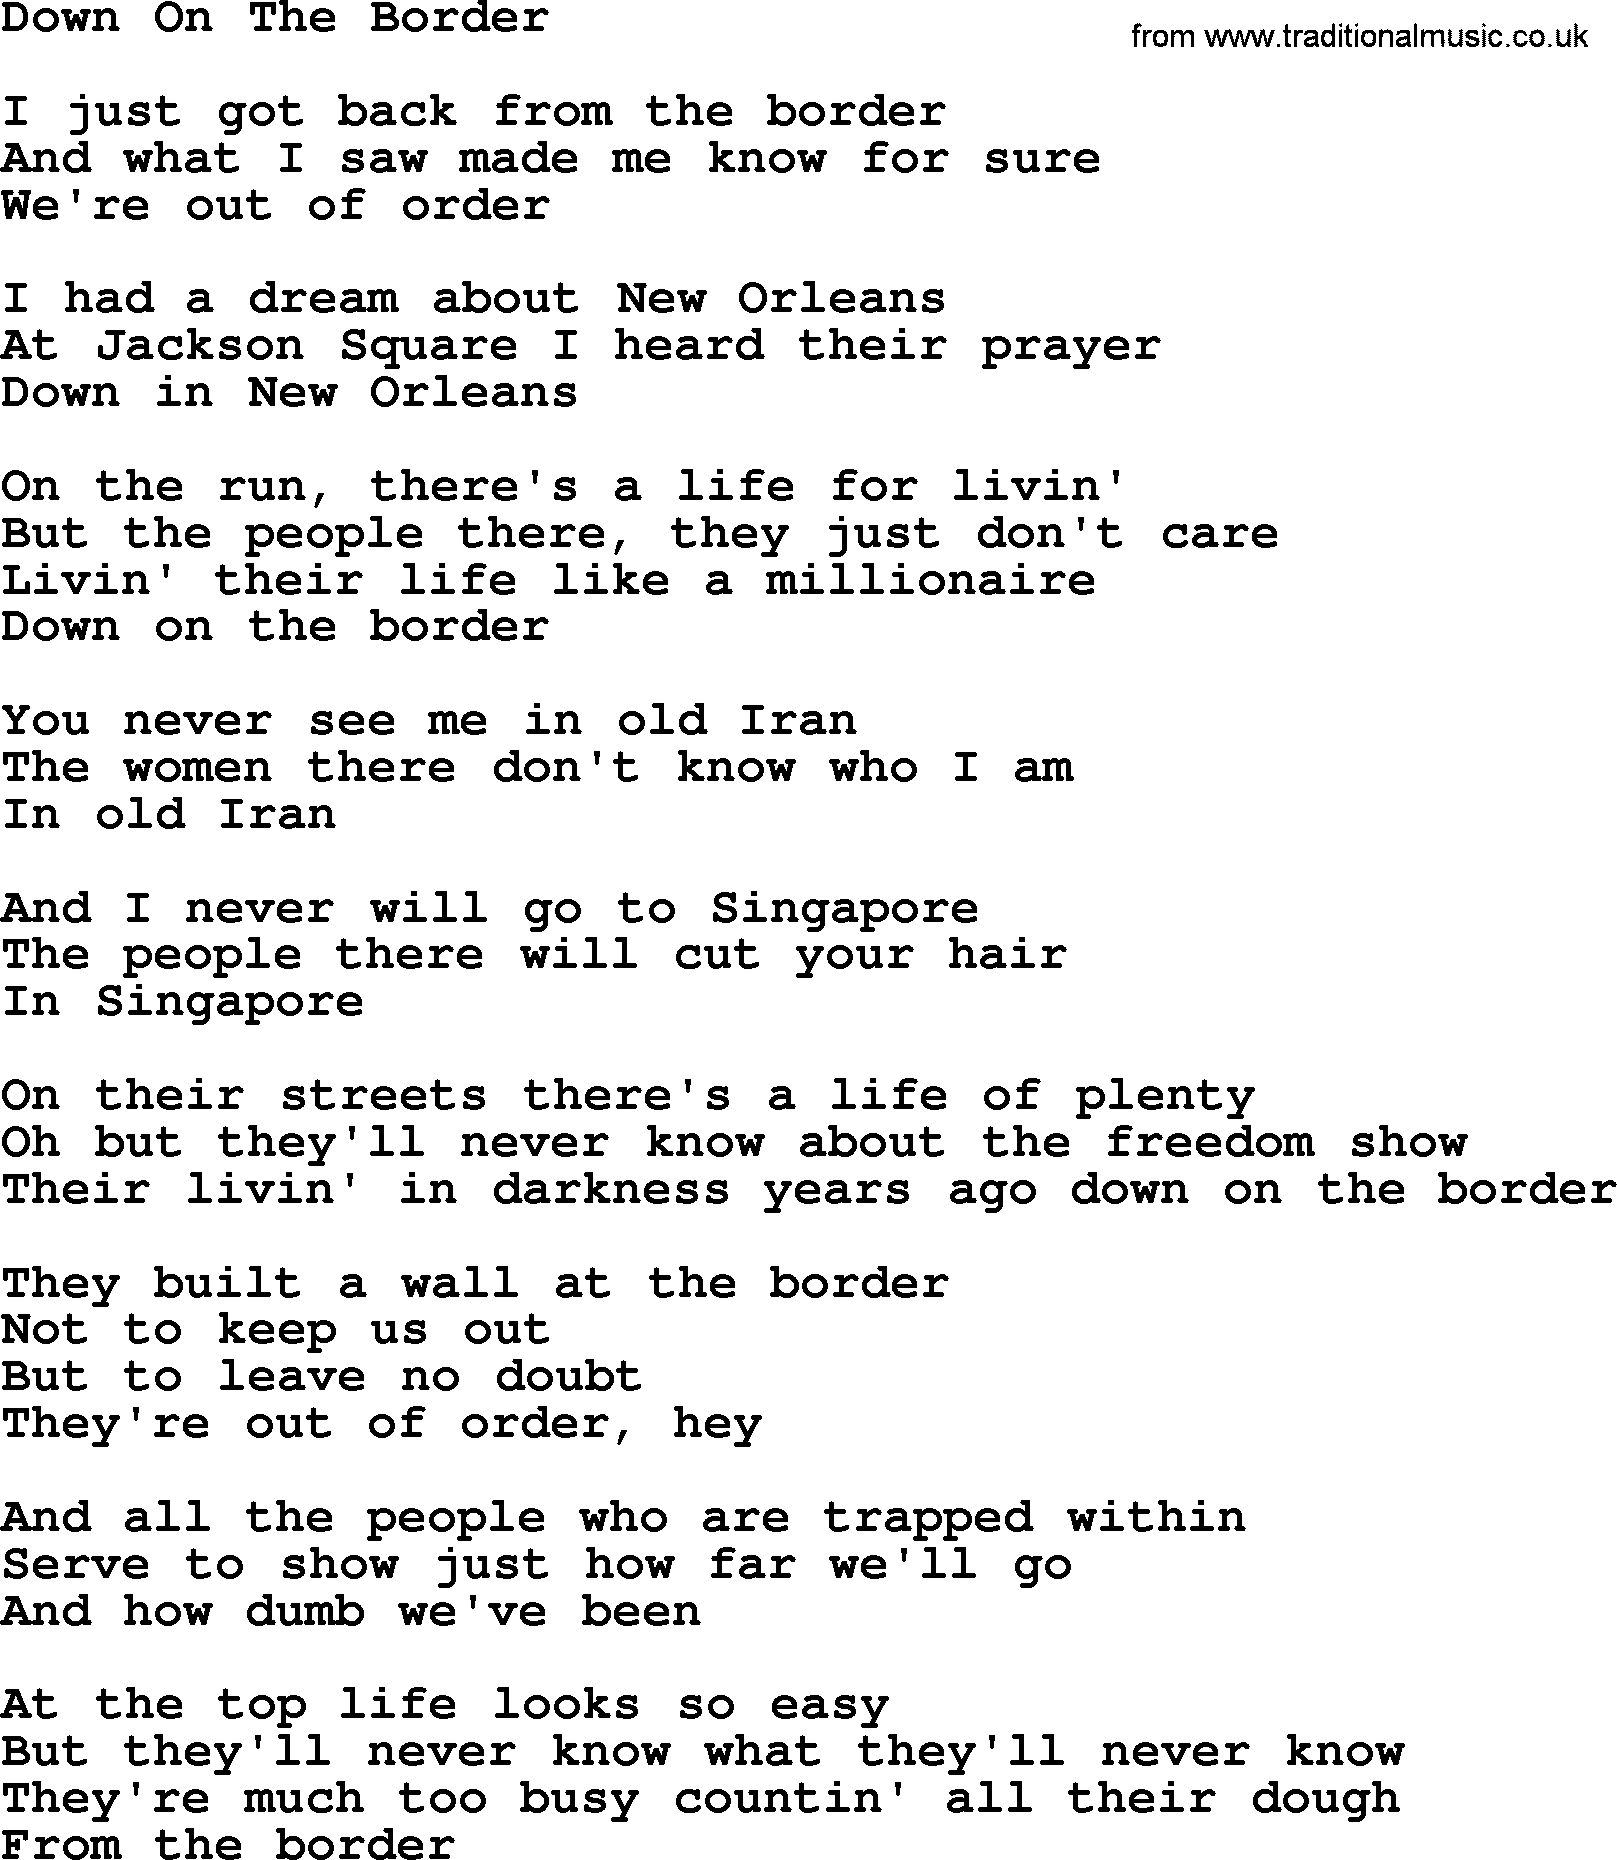 The Byrds song Down On The Border, lyrics